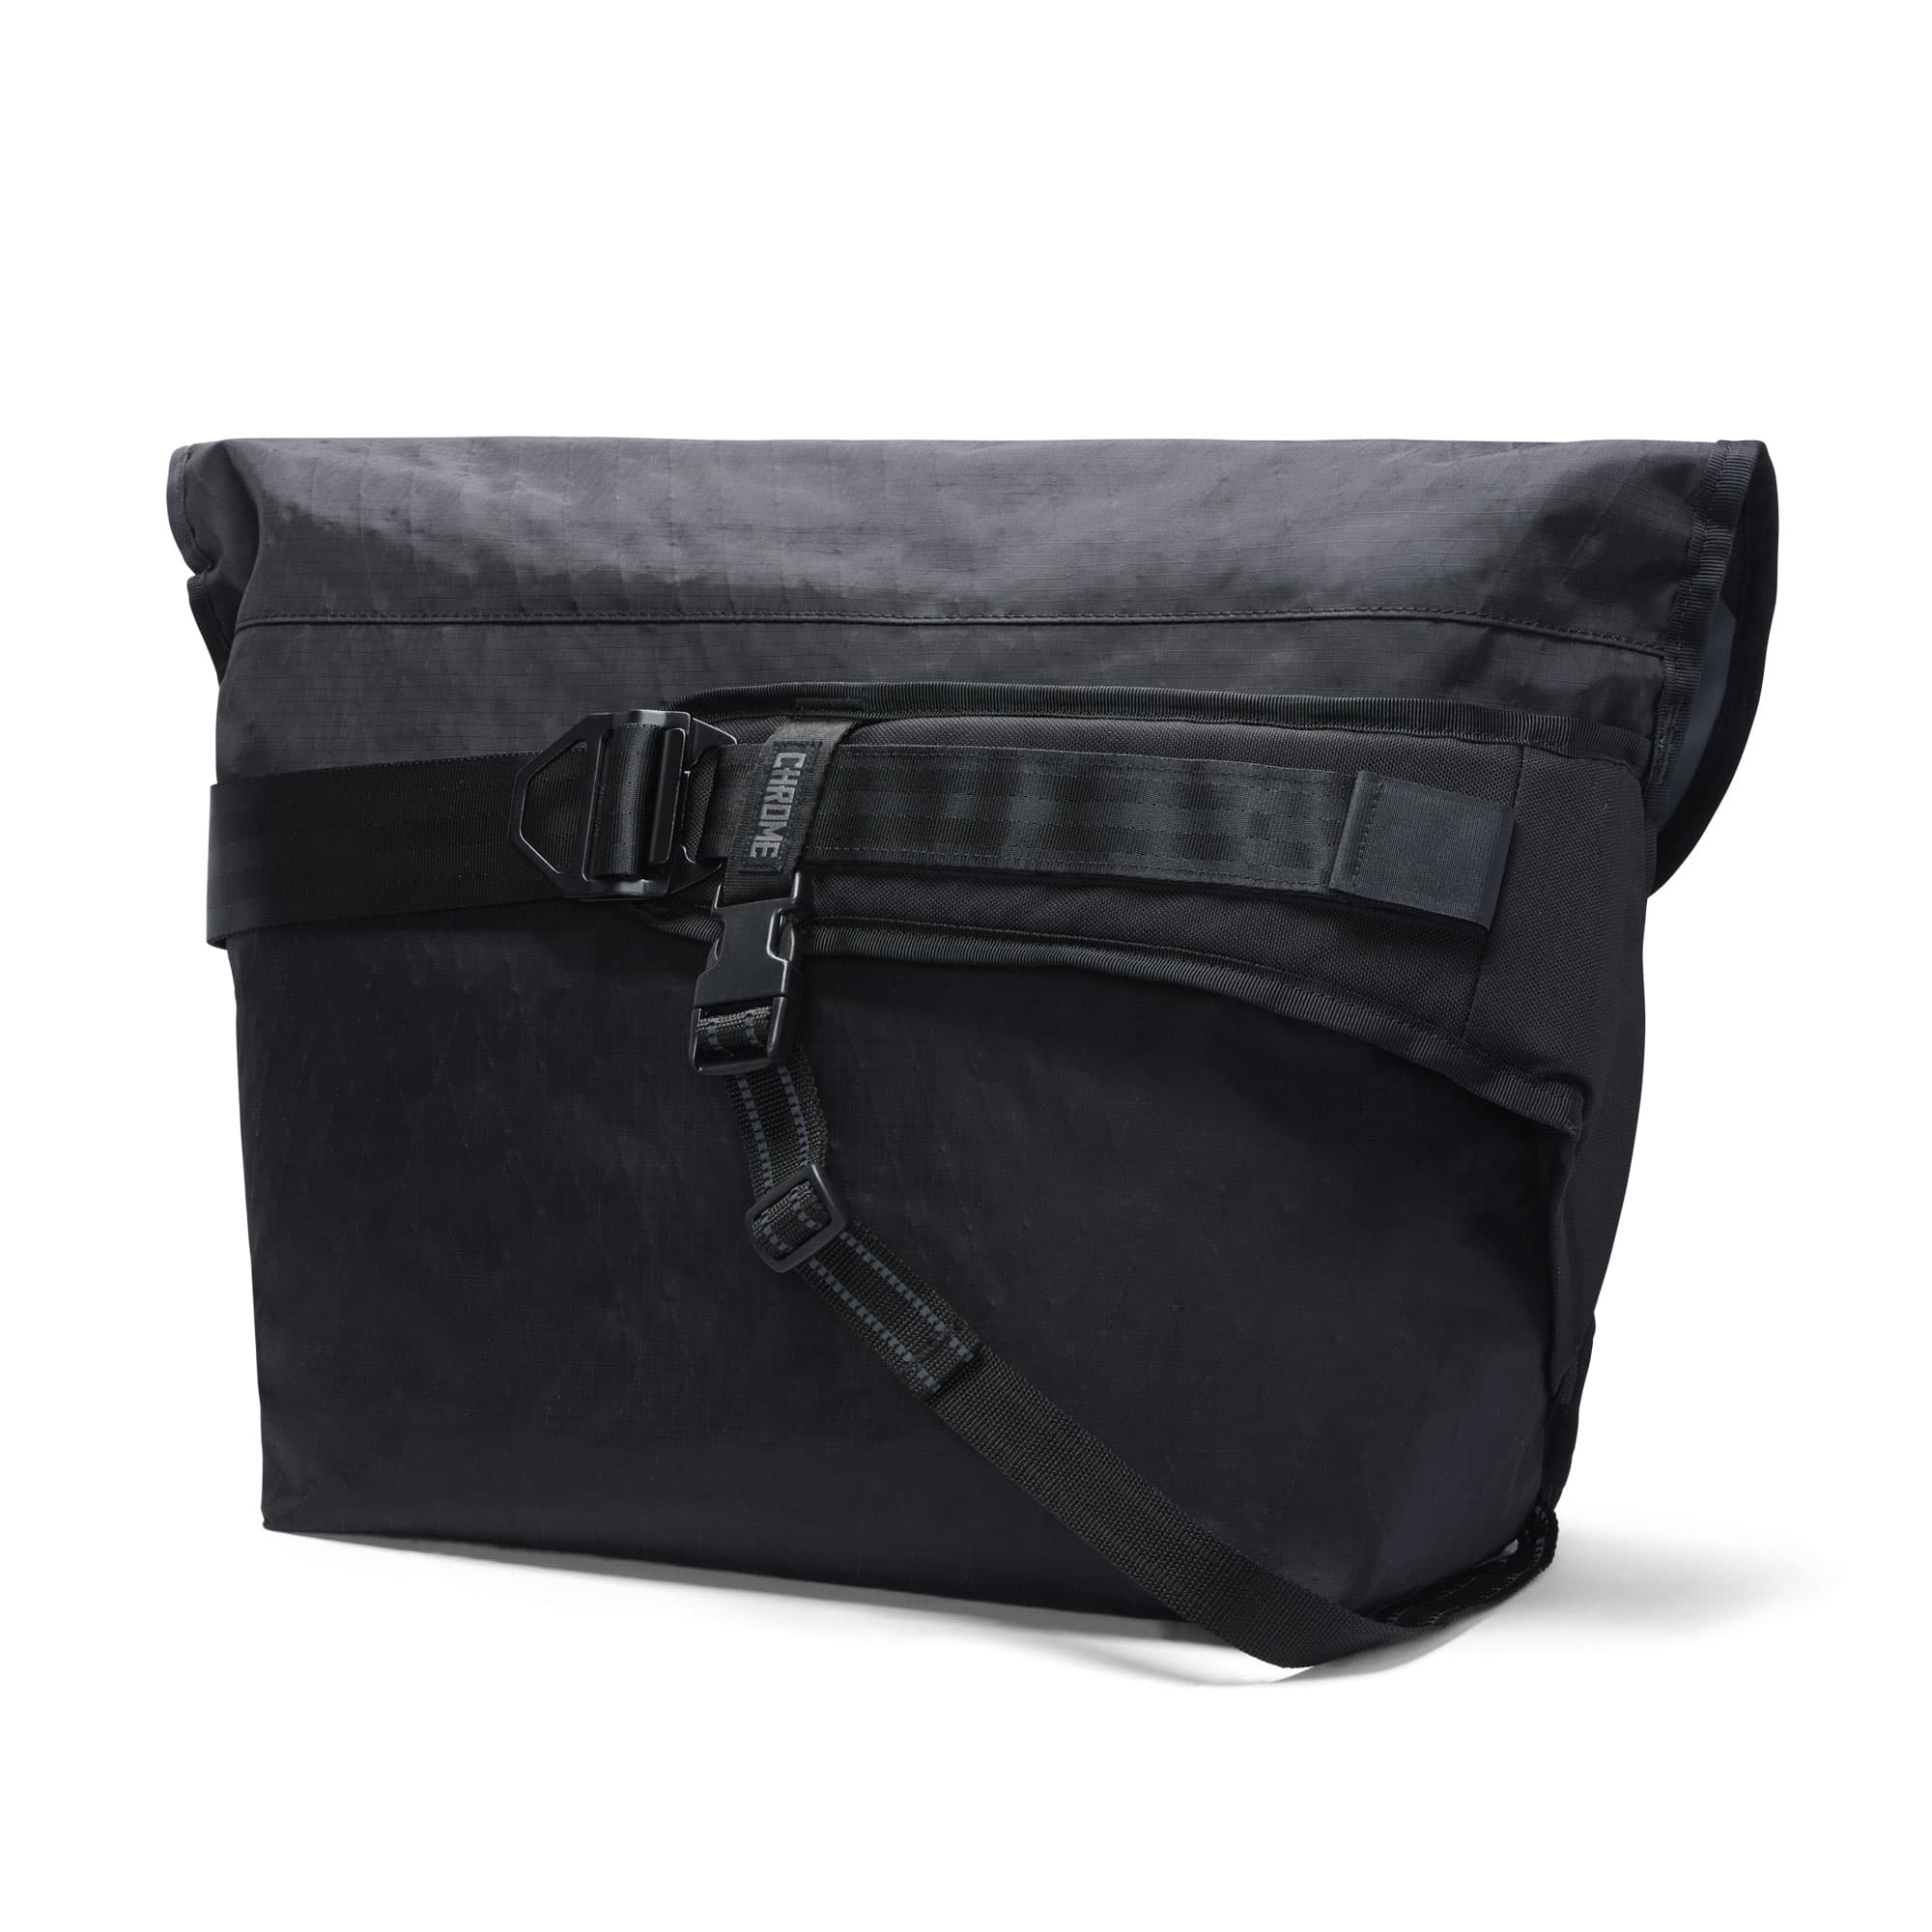 The back of the Citizen LTD bag in black X